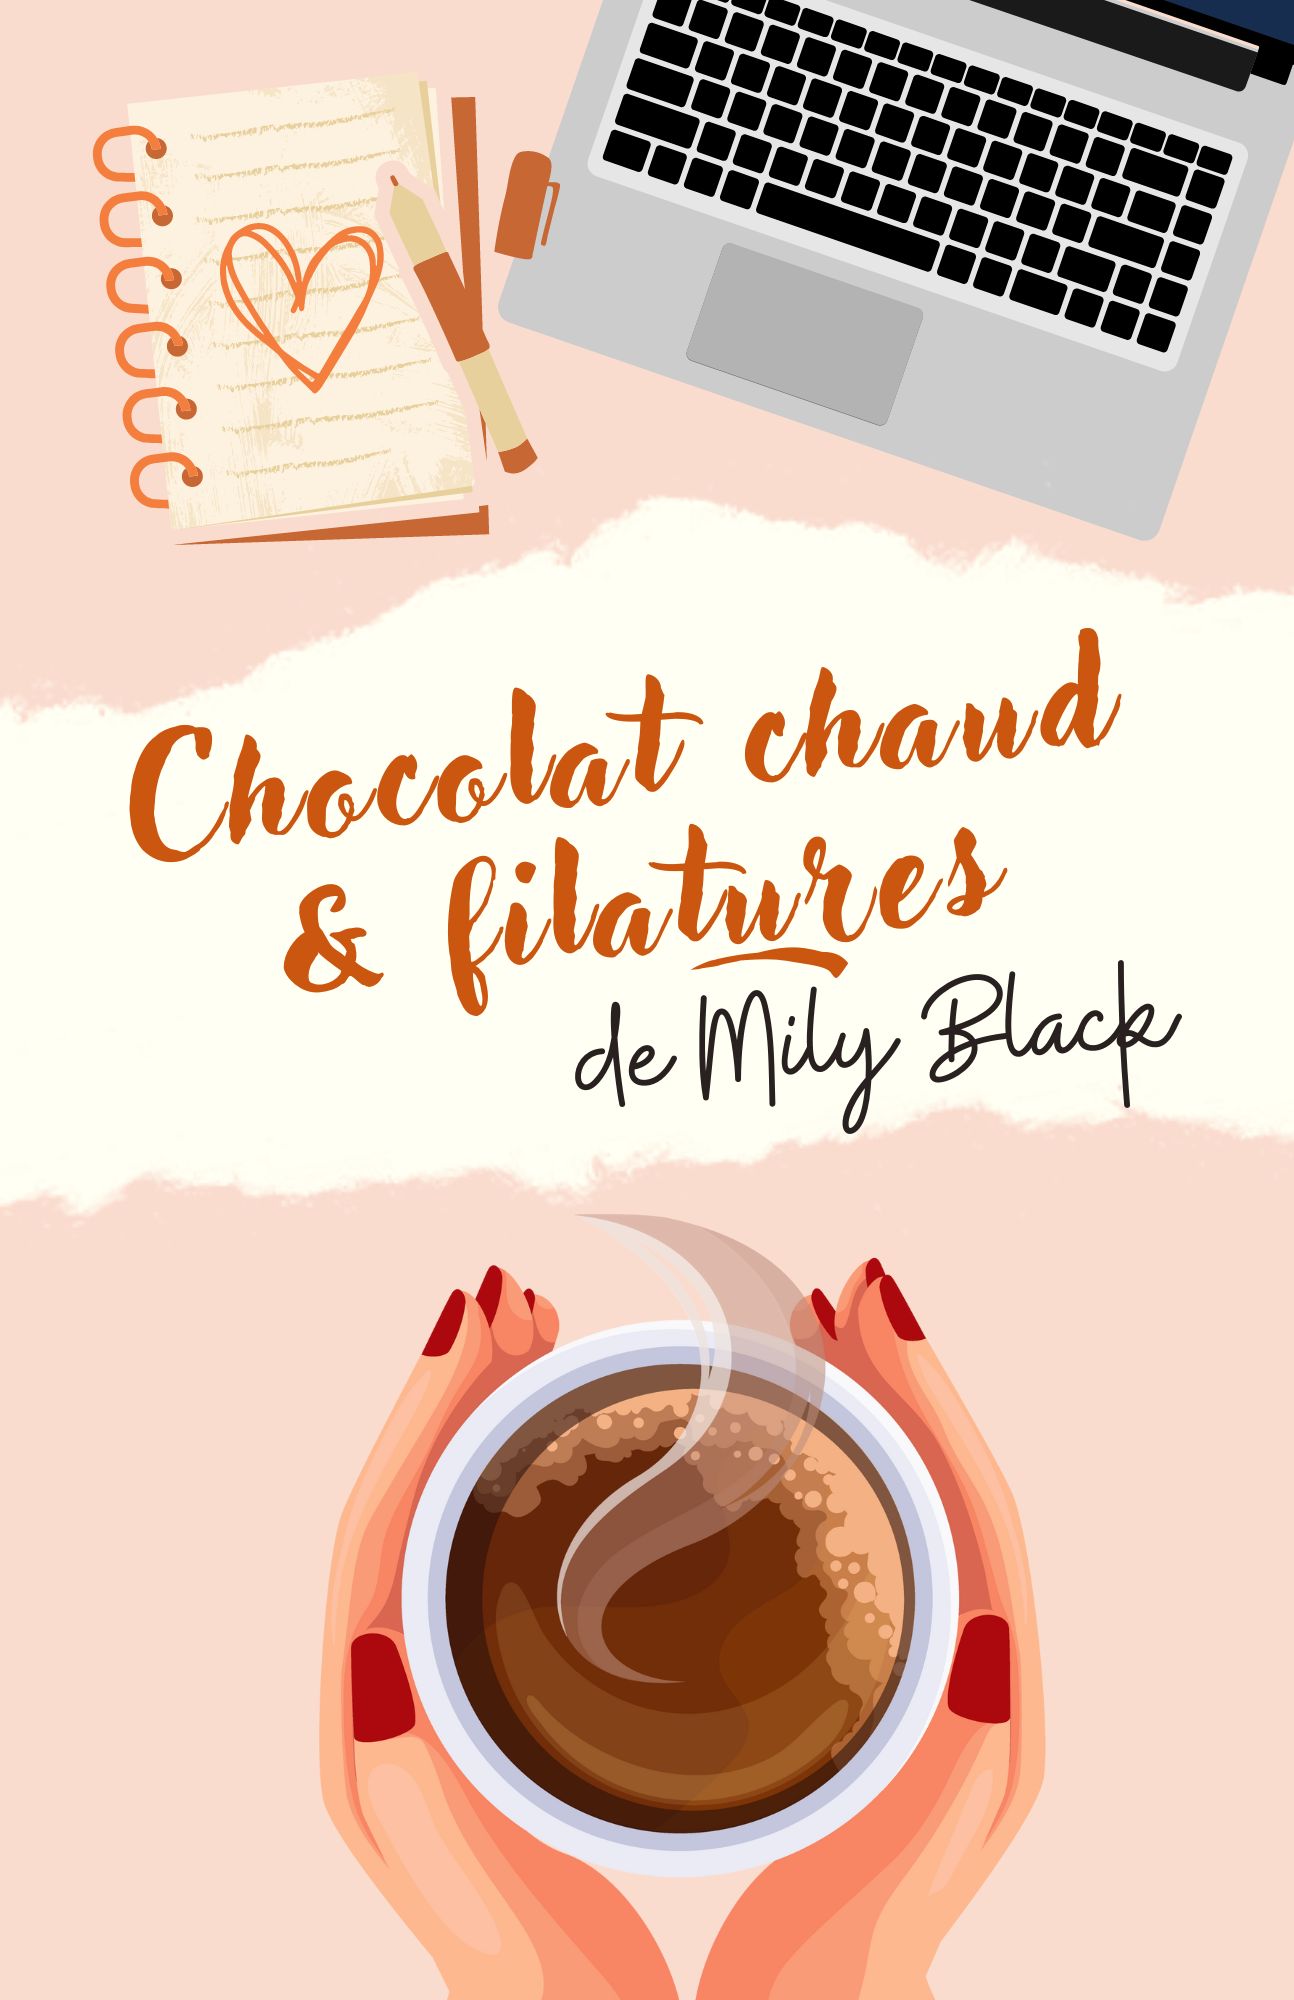 http://www.milyblack.com/p/chocolat-chaud-et-filatures-2023.html